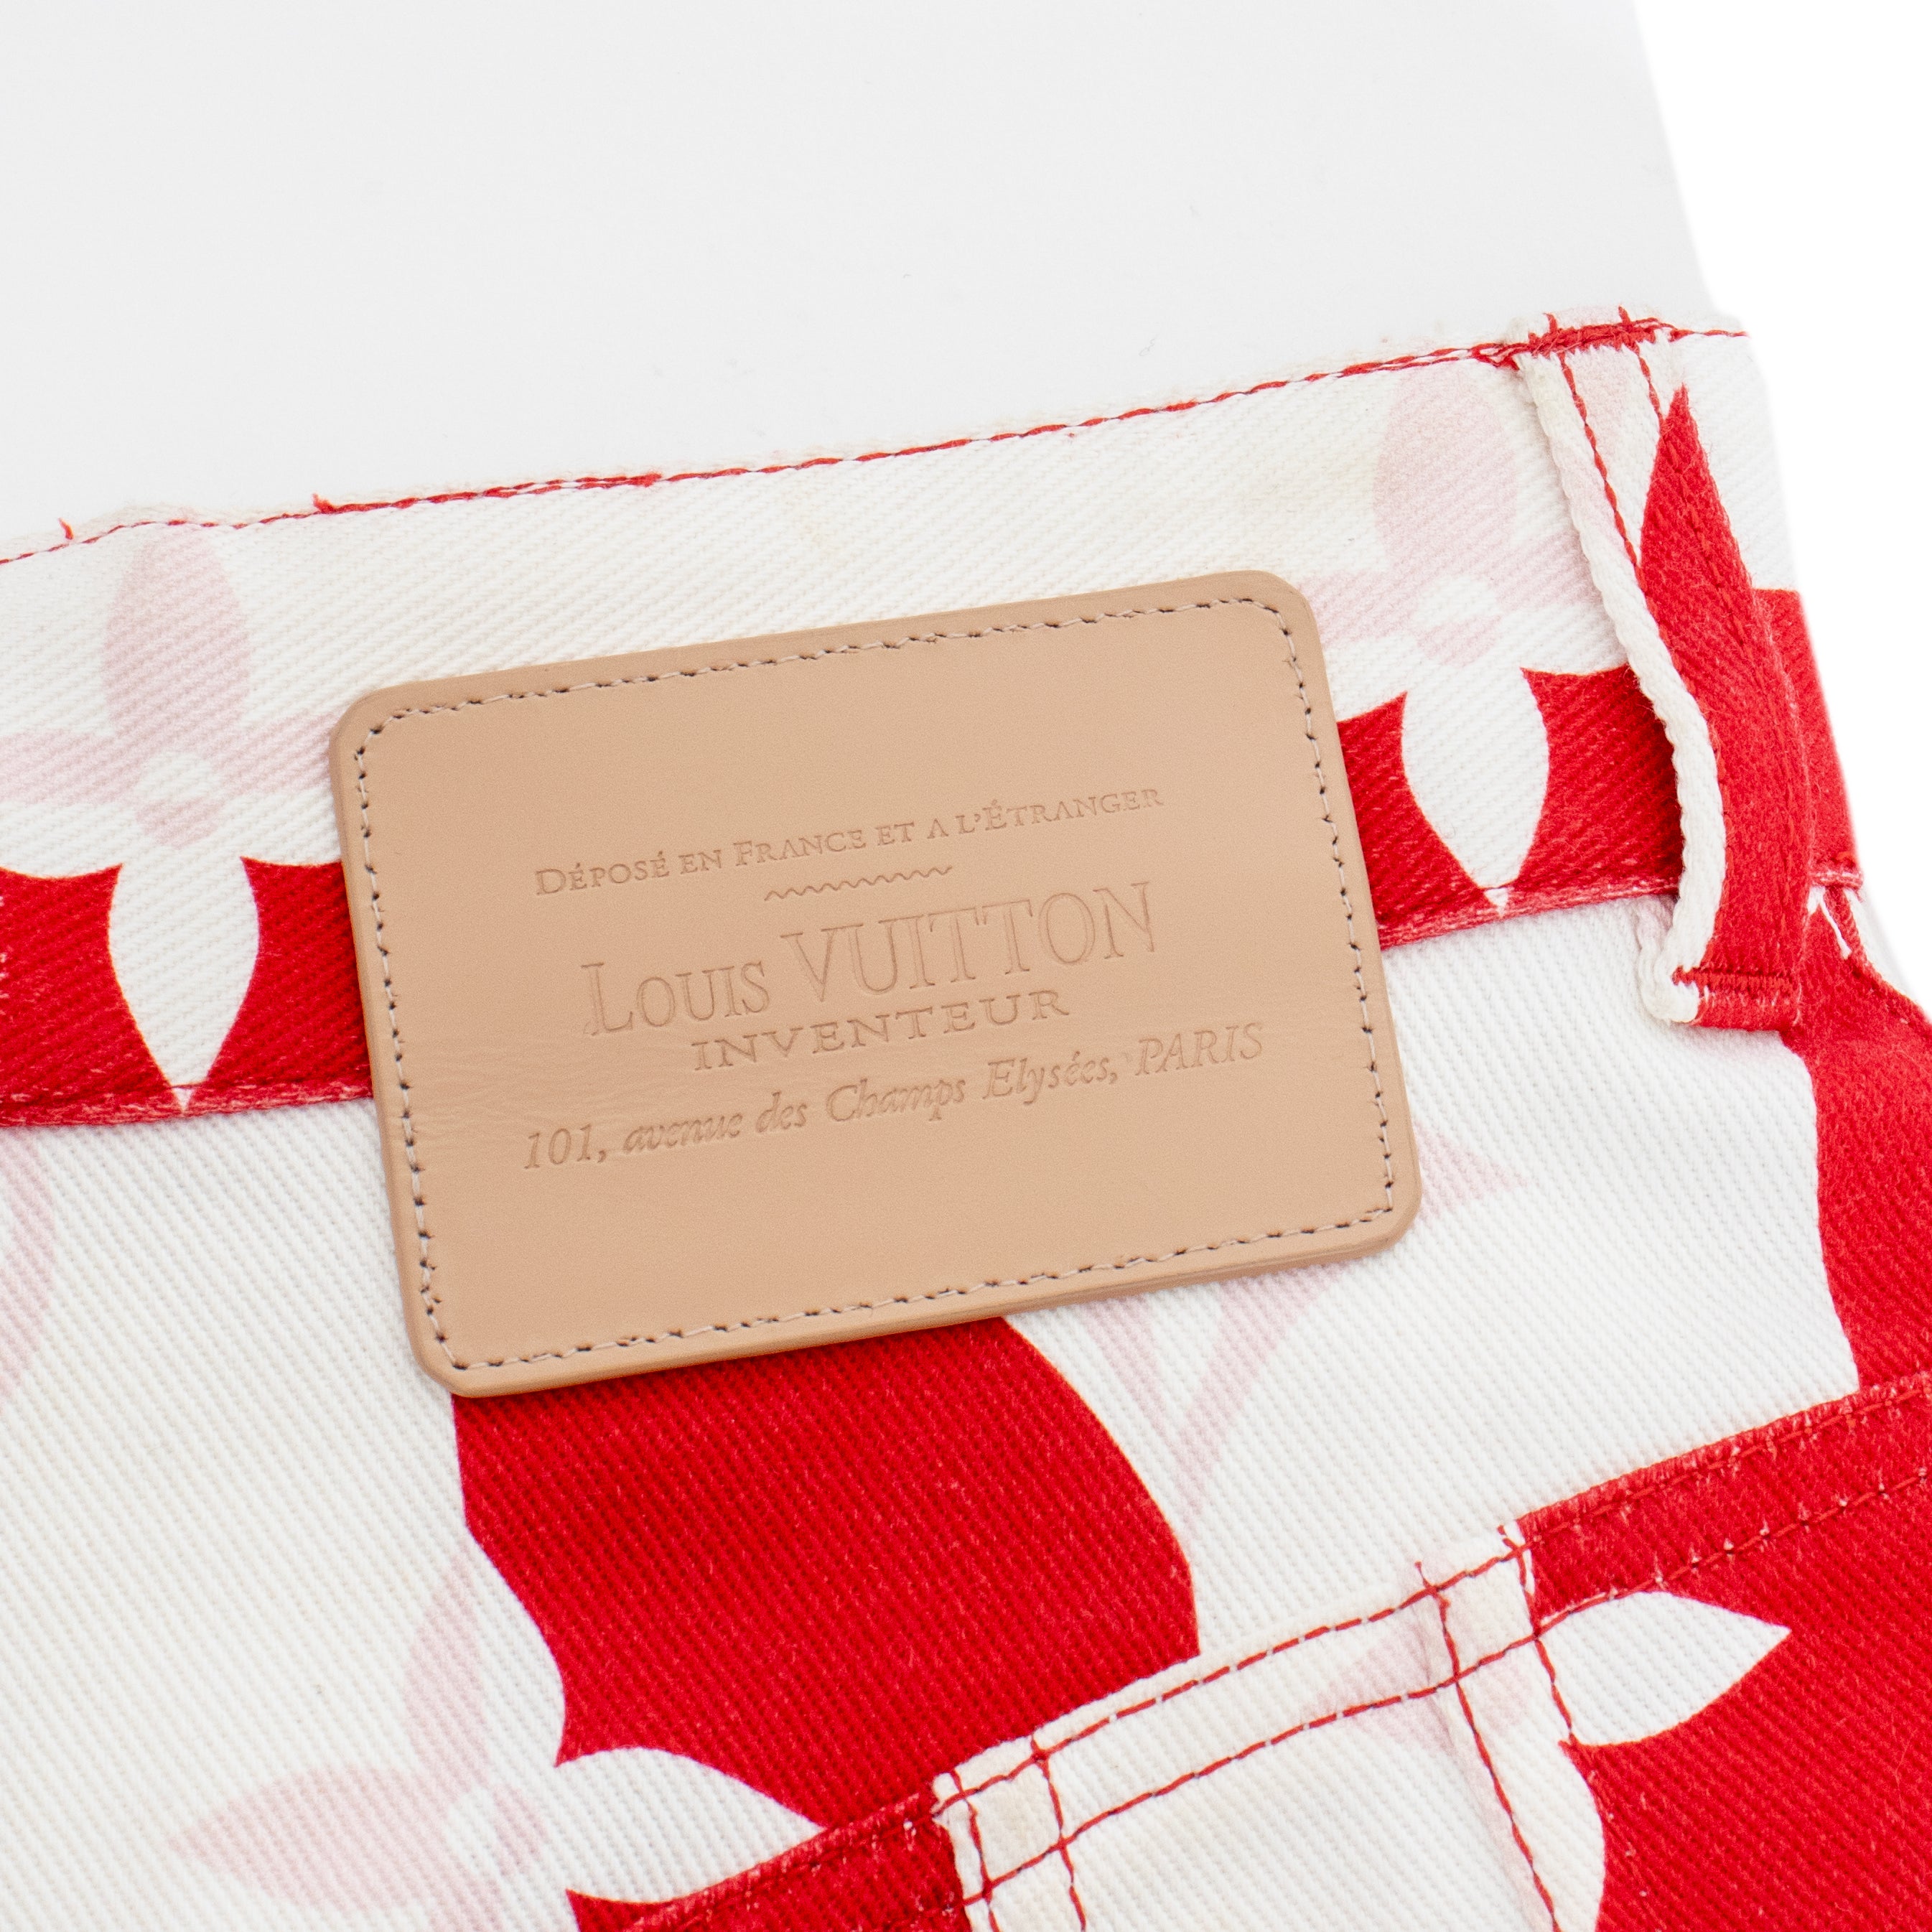 Louis Vuitton Jacquard Knit Monogram Top + Skirt Set | MTYCI